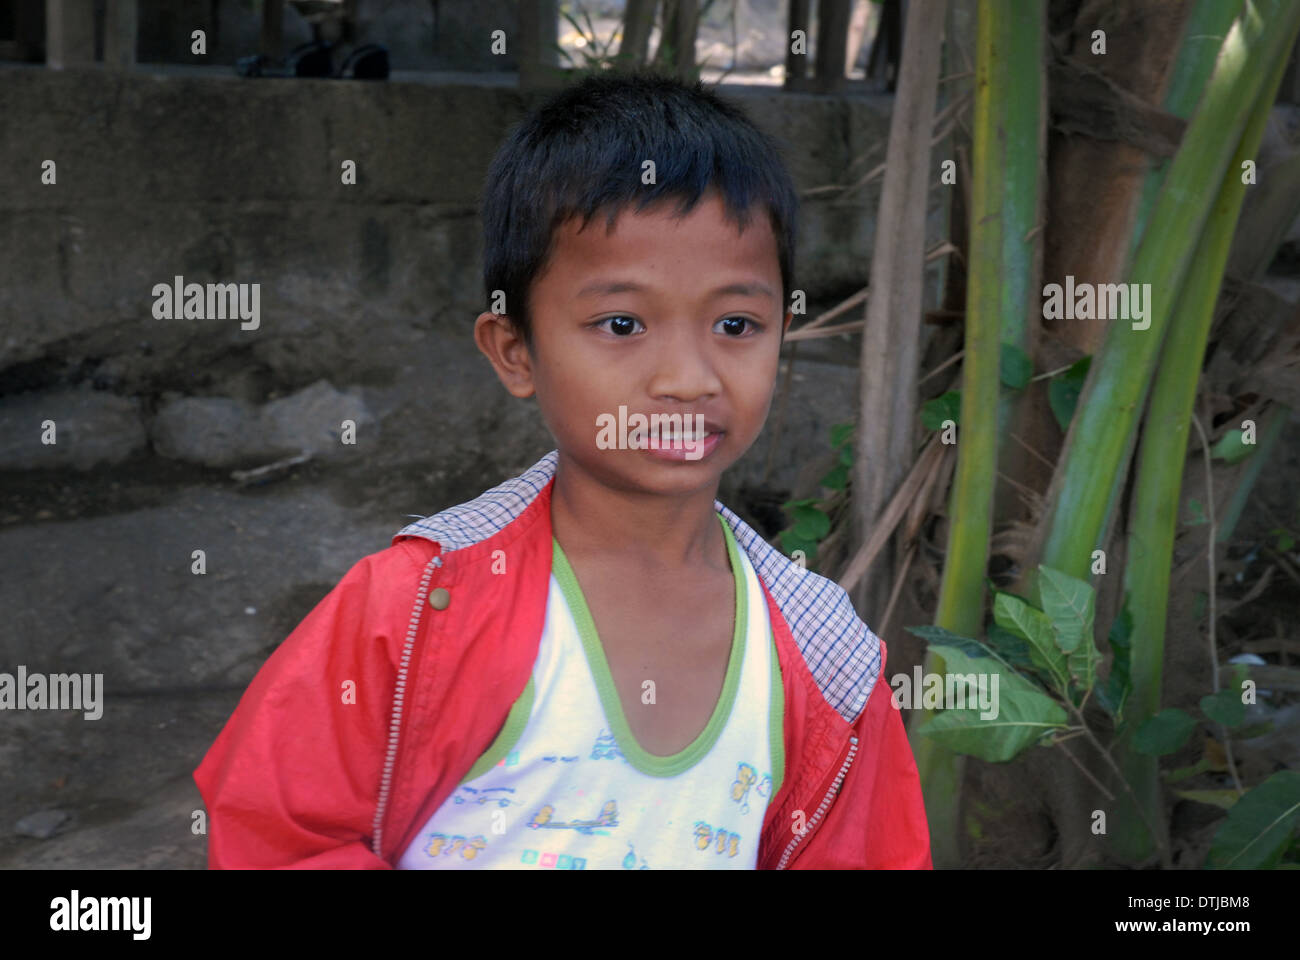 Child, Taal Volcano, Philippines Stock Photo - Alamy